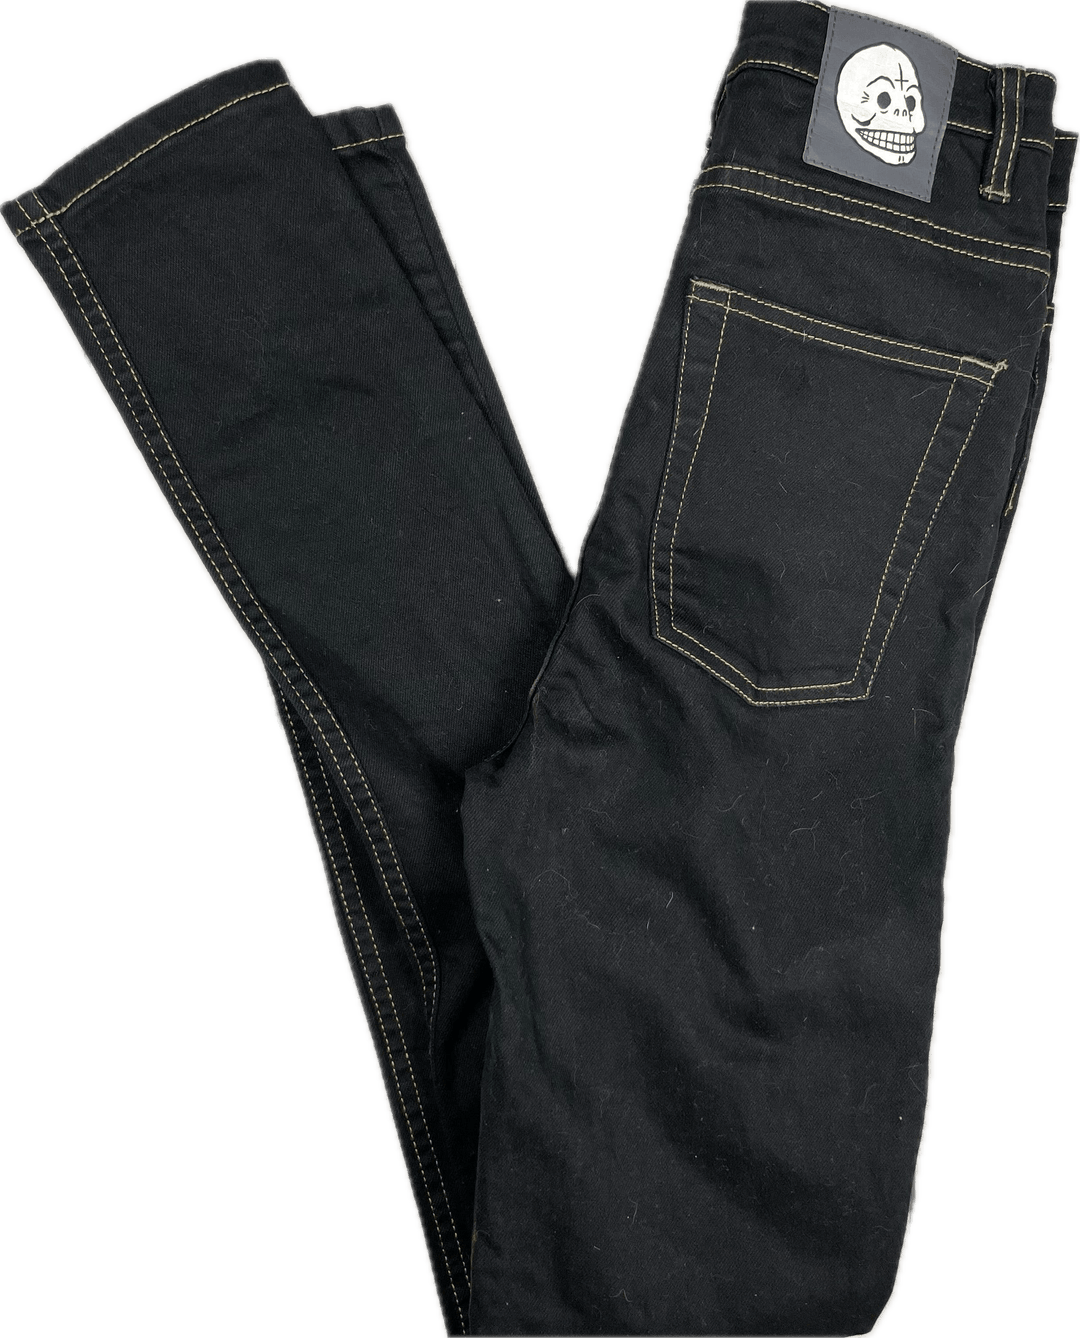 Cheap Monday 'Skyscraper' Black Skinny Jeans - Size 27/34 - Jean Pool